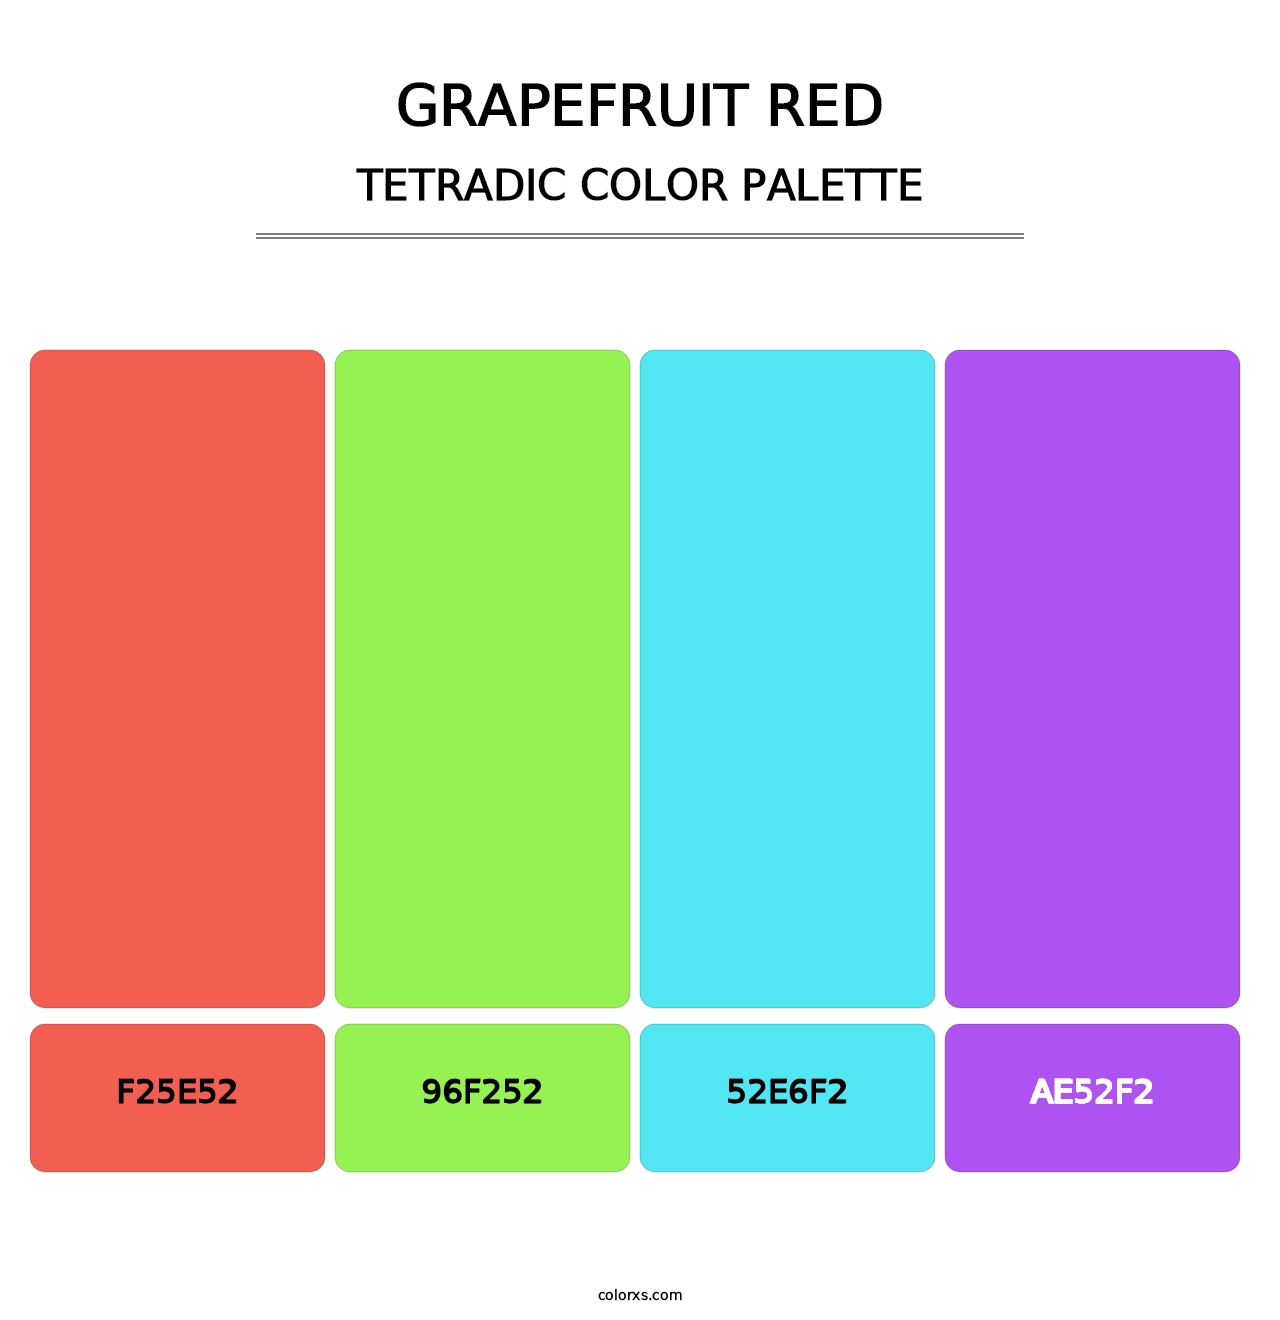 Grapefruit Red - Tetradic Color Palette